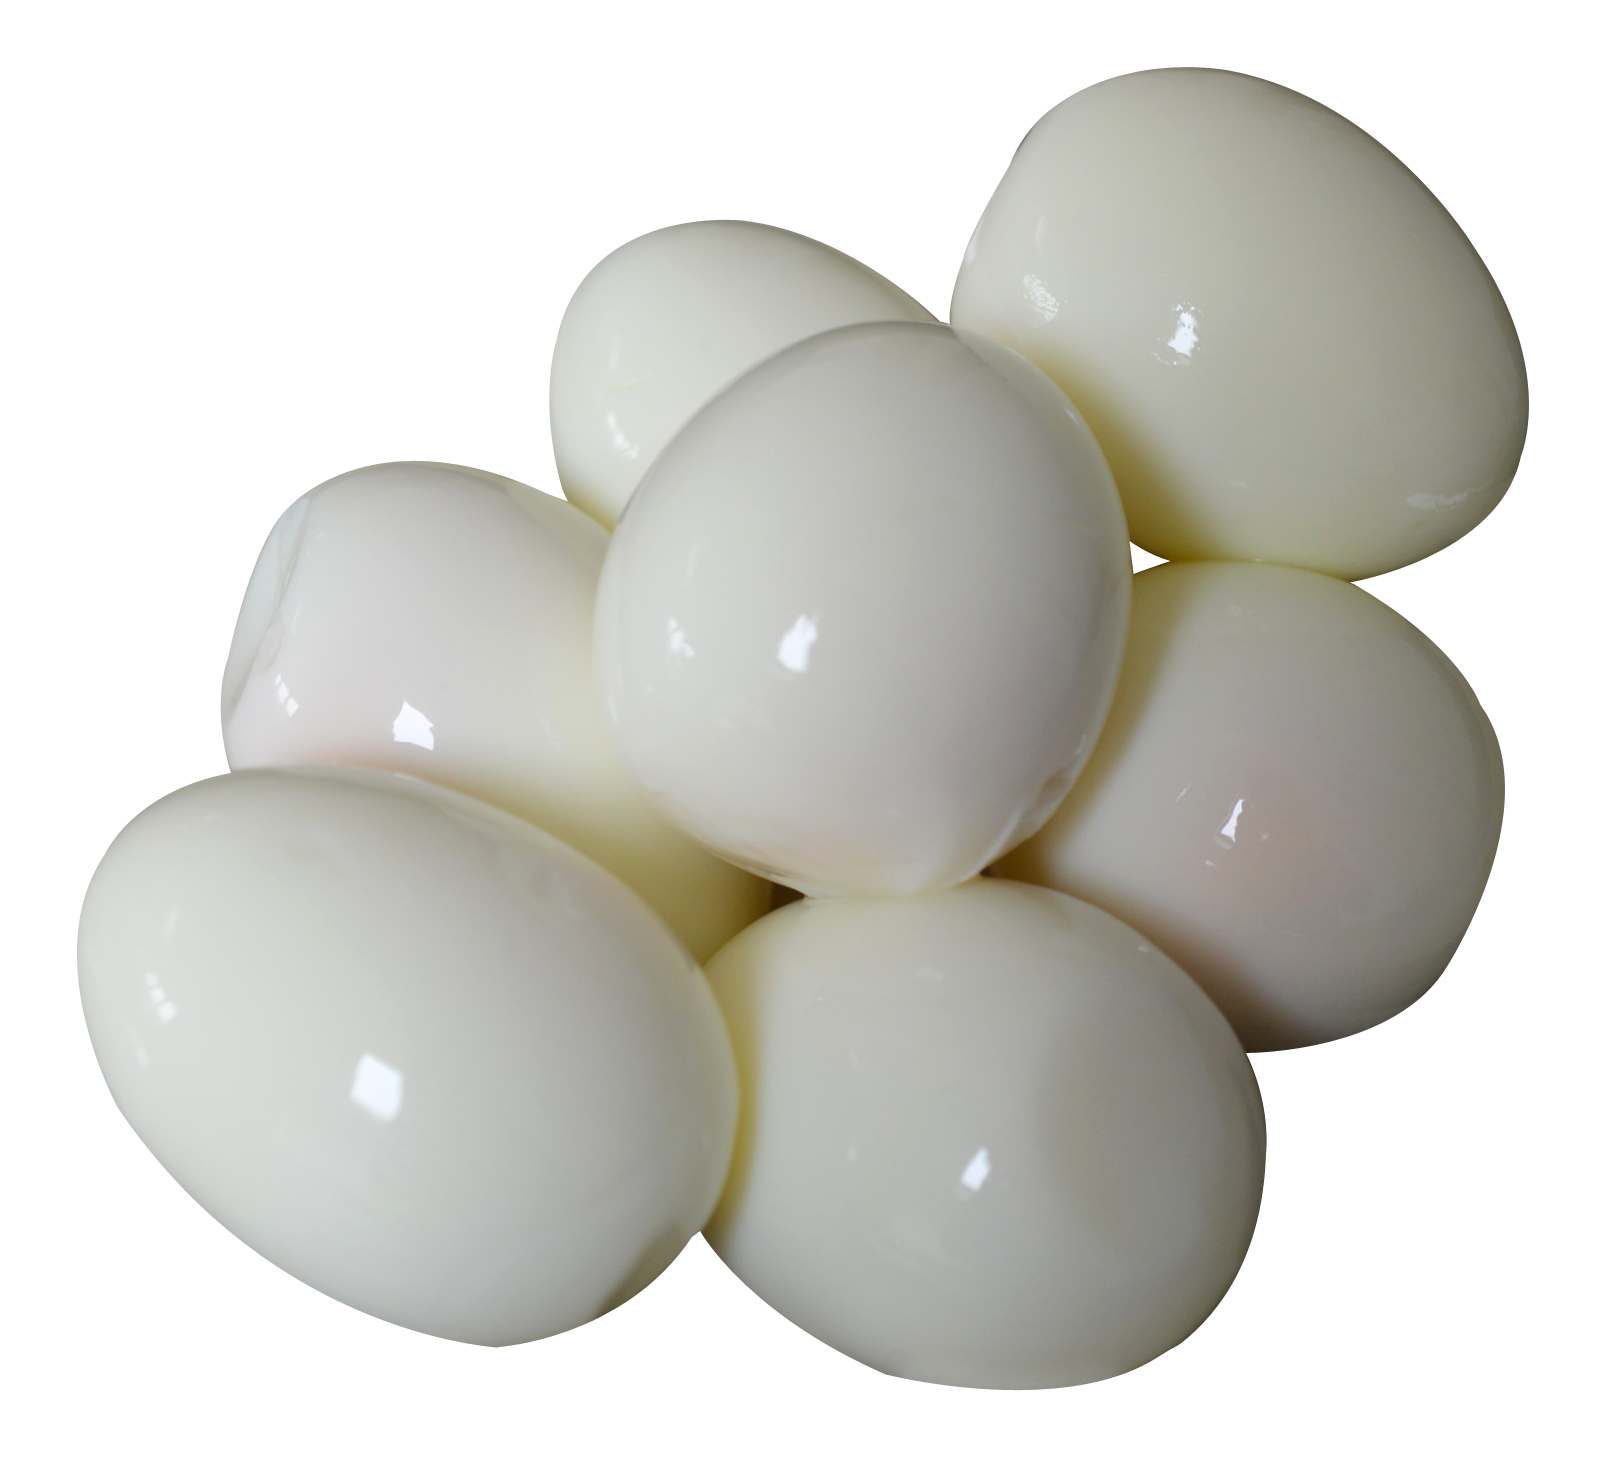 Png images pngpix transparent. Eggs clipart boiled egg